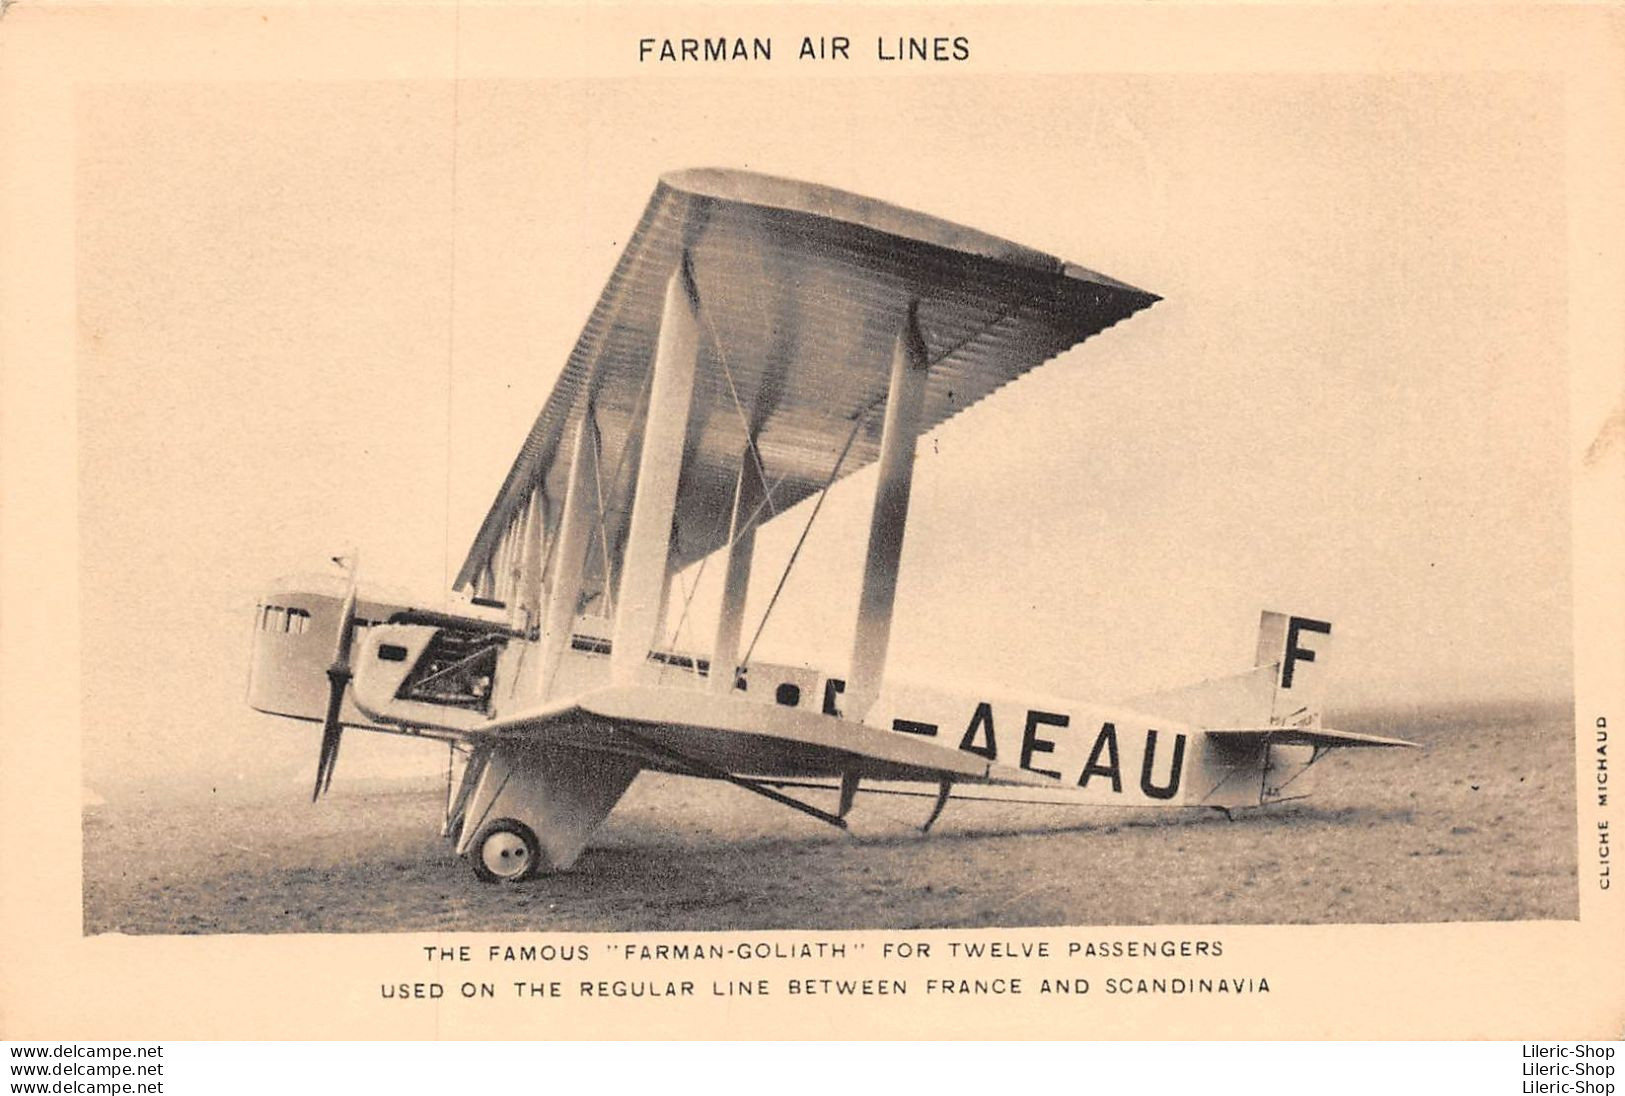 FARMAN AIR LINES THE FAMOUS "FARMAN-GOLIATH" FOR TWELVE PASSENGERS - 1919-1938: Between Wars